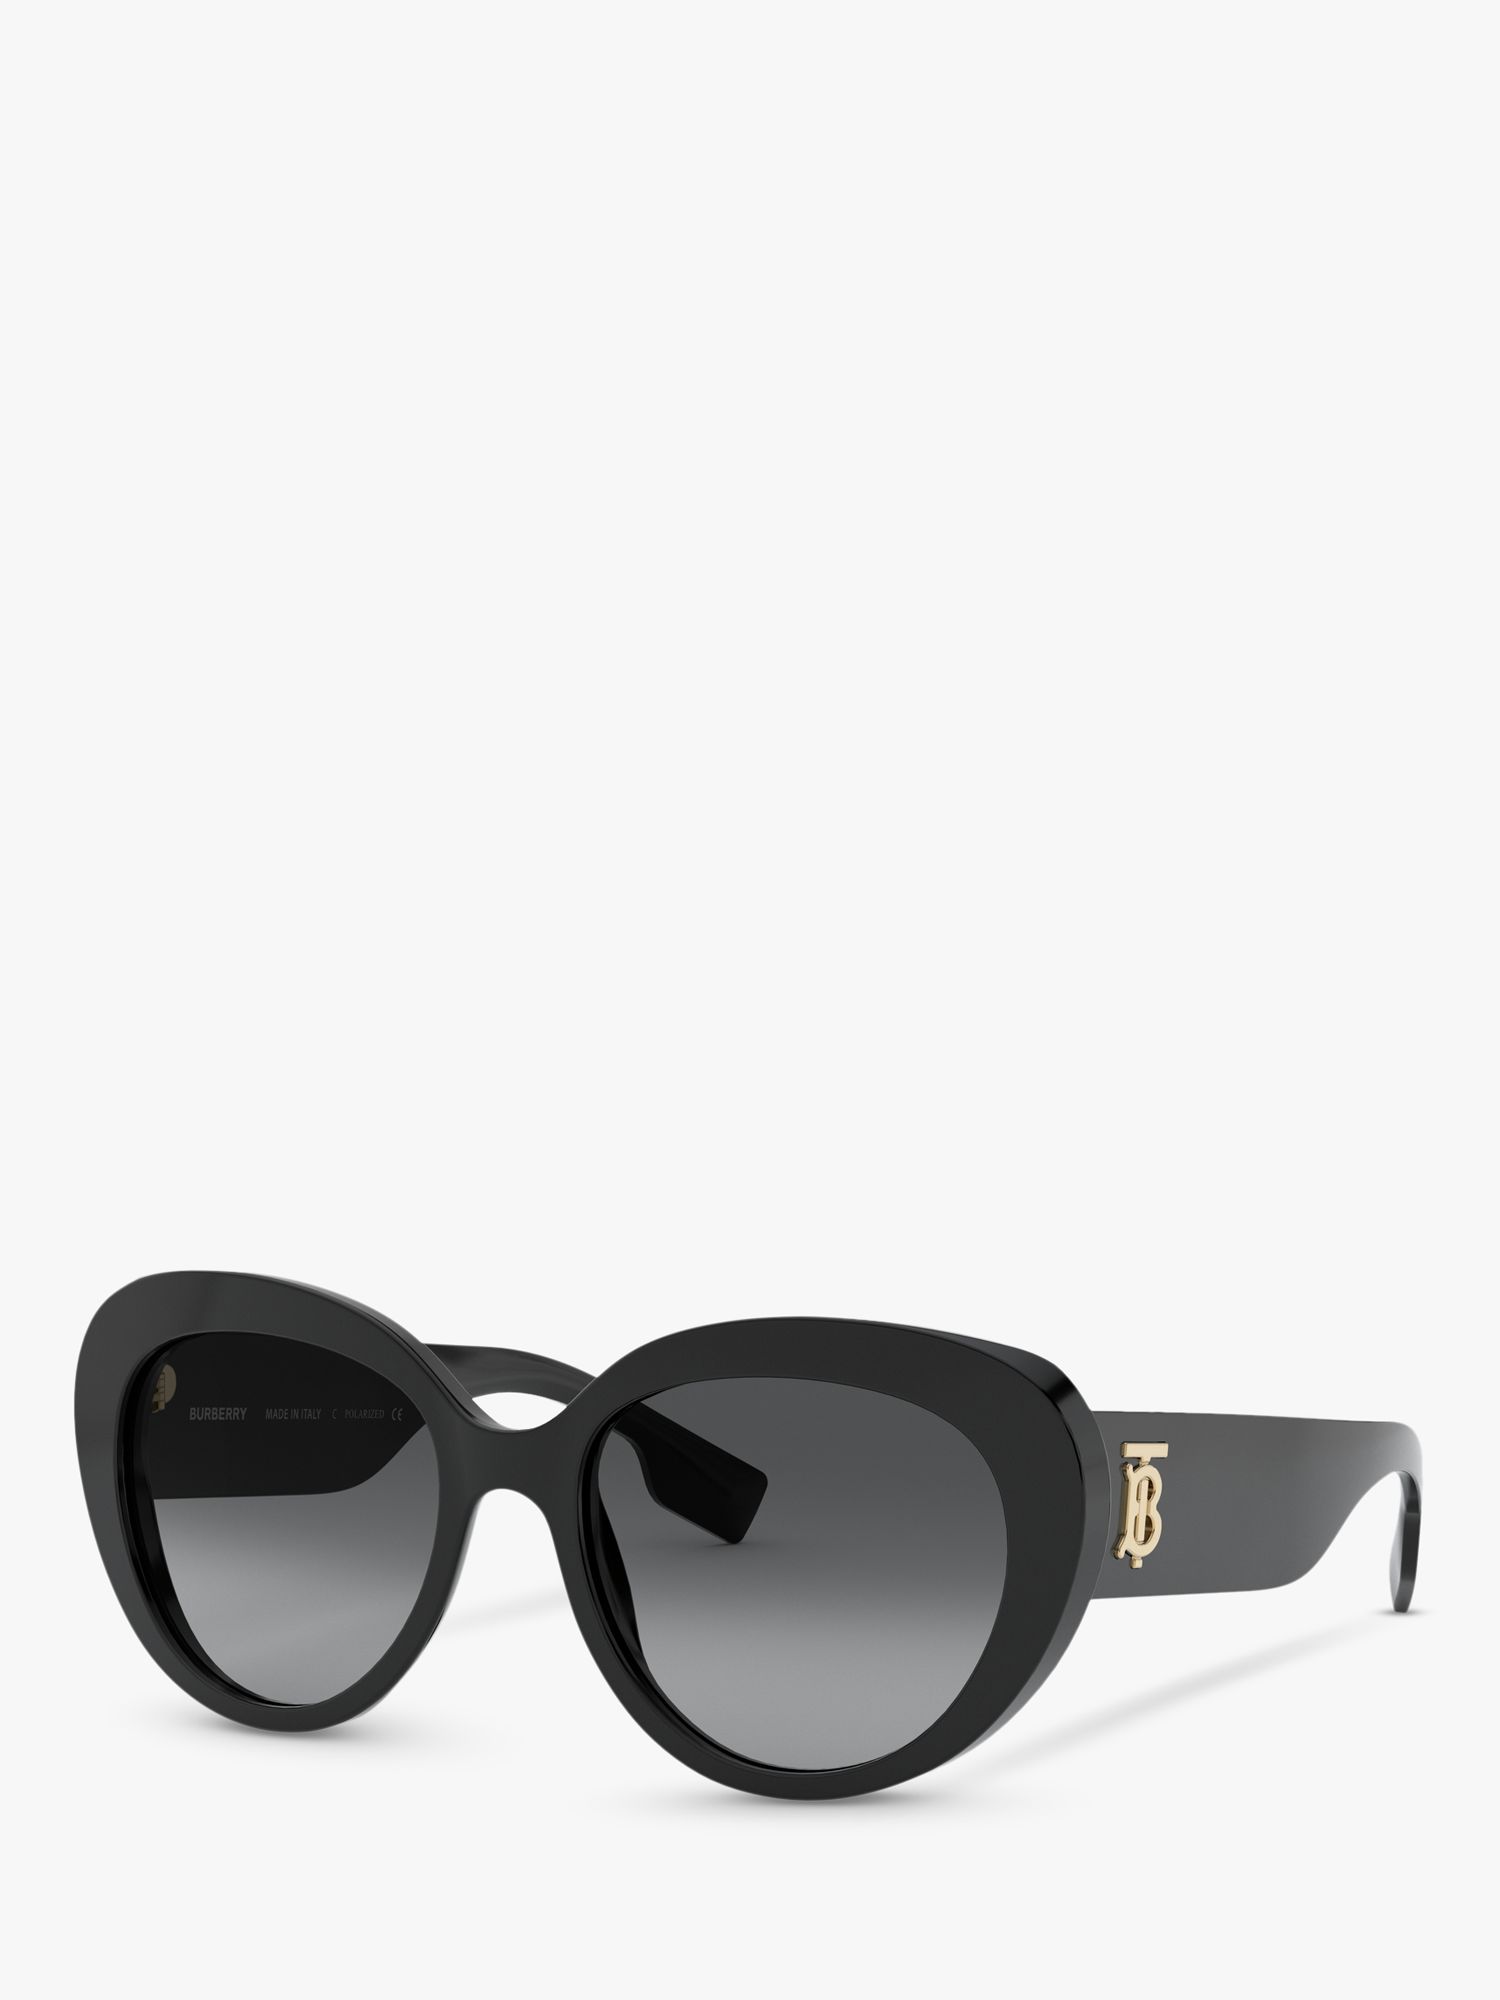 Women's Burberry Sunglasses | John Lewis & Partners